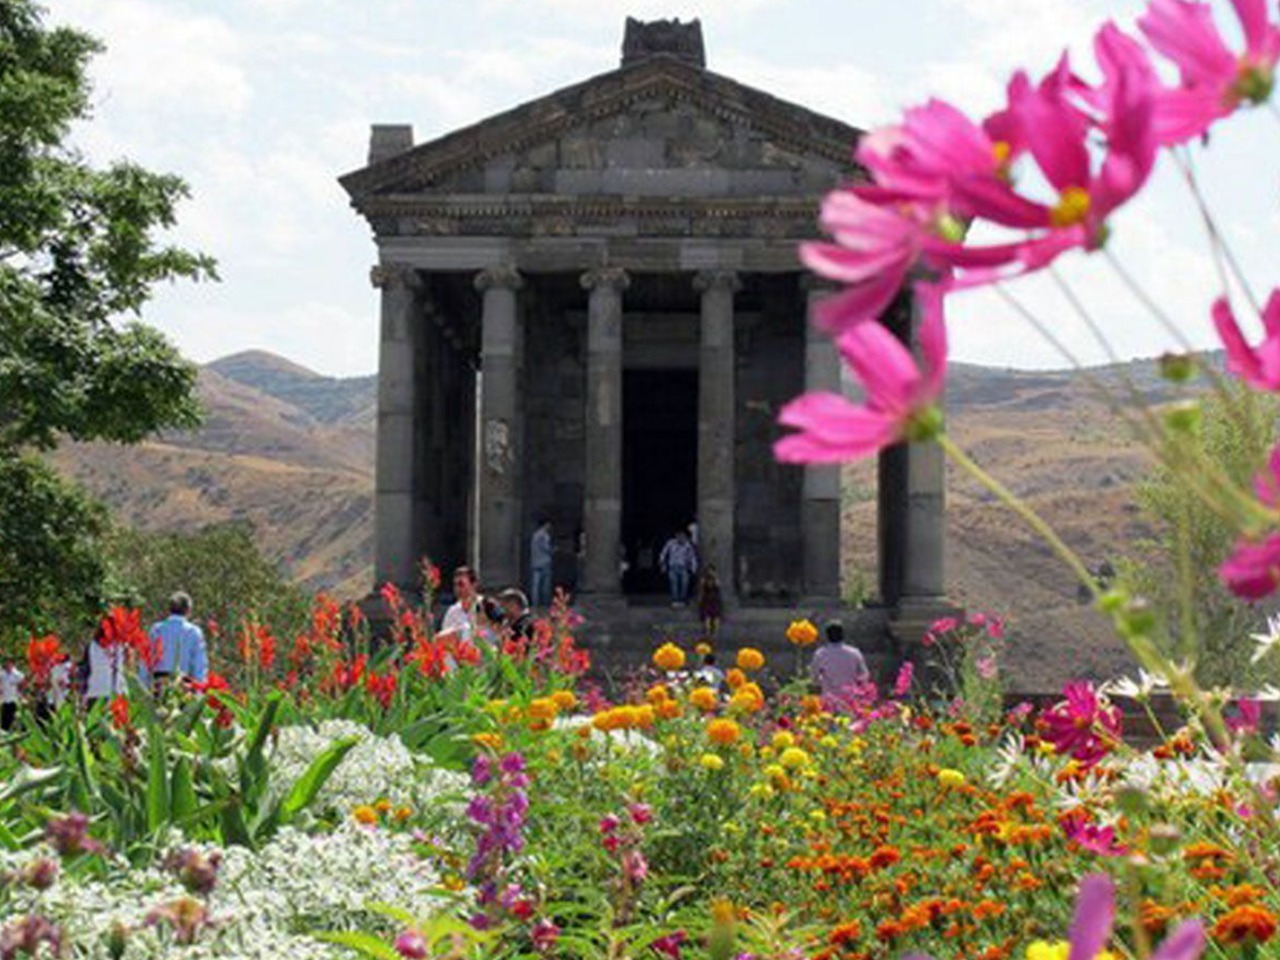 Мозаика Армении за 5 дней: от Еревана до Севана | Цена 515€, отзывы, описание экскурсии